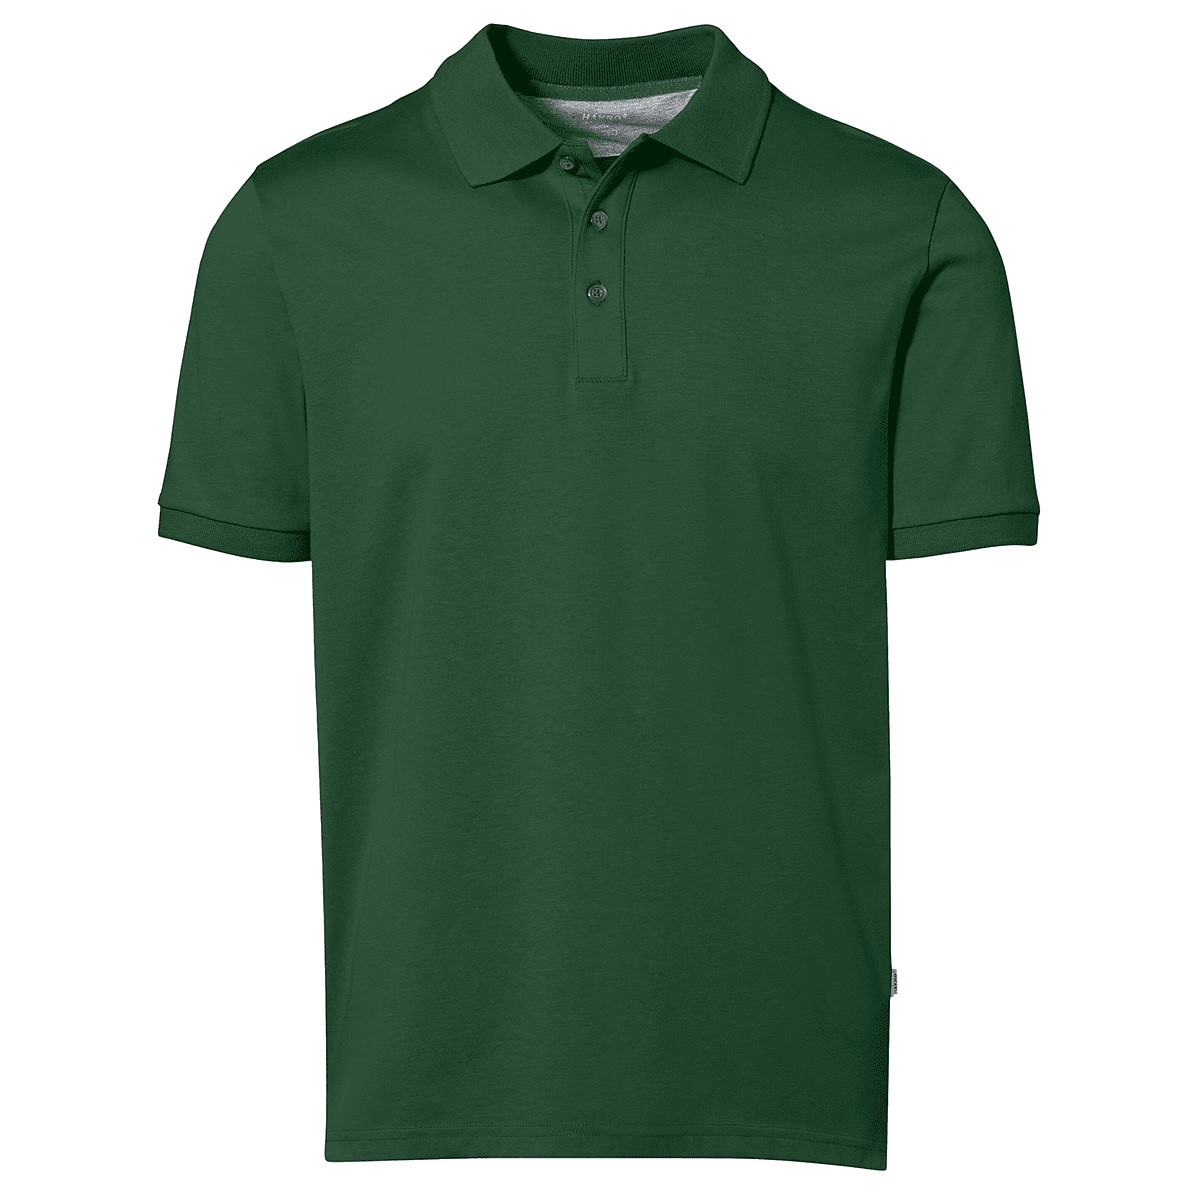 Poloshirt Herren Funktion grün